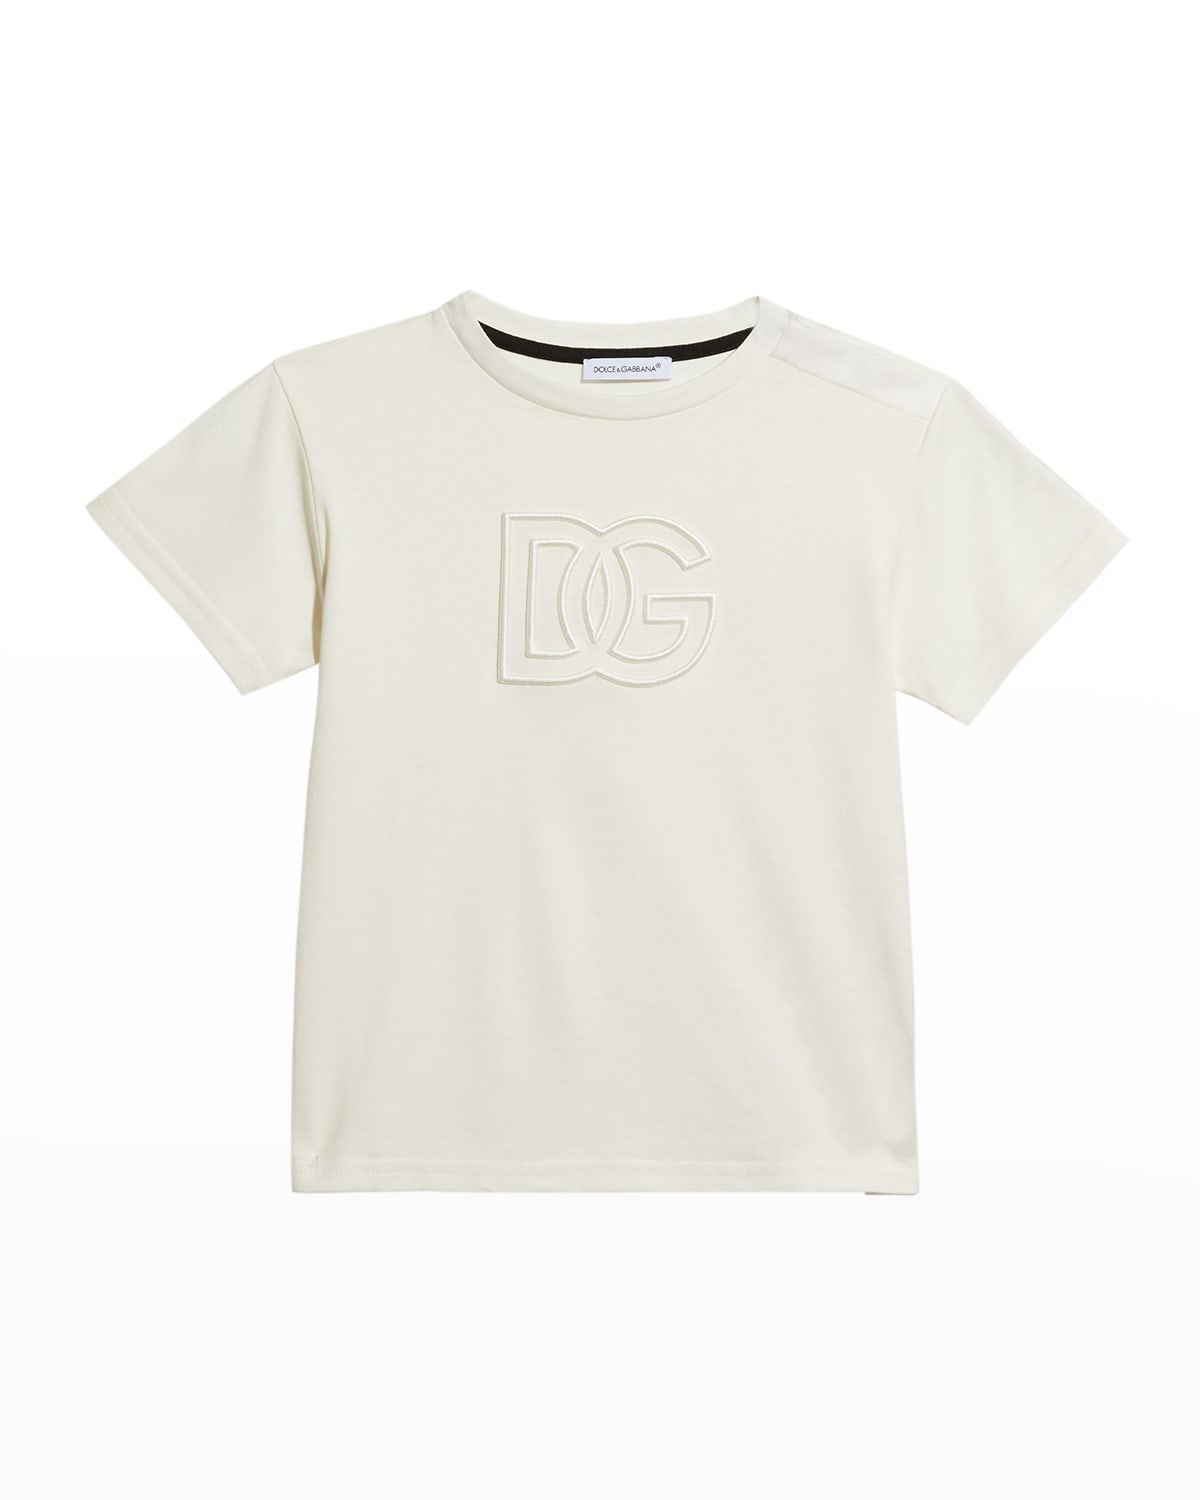 Boy's Tonal Embroidered Interlocking DG T-Shirt, Size 12-30M